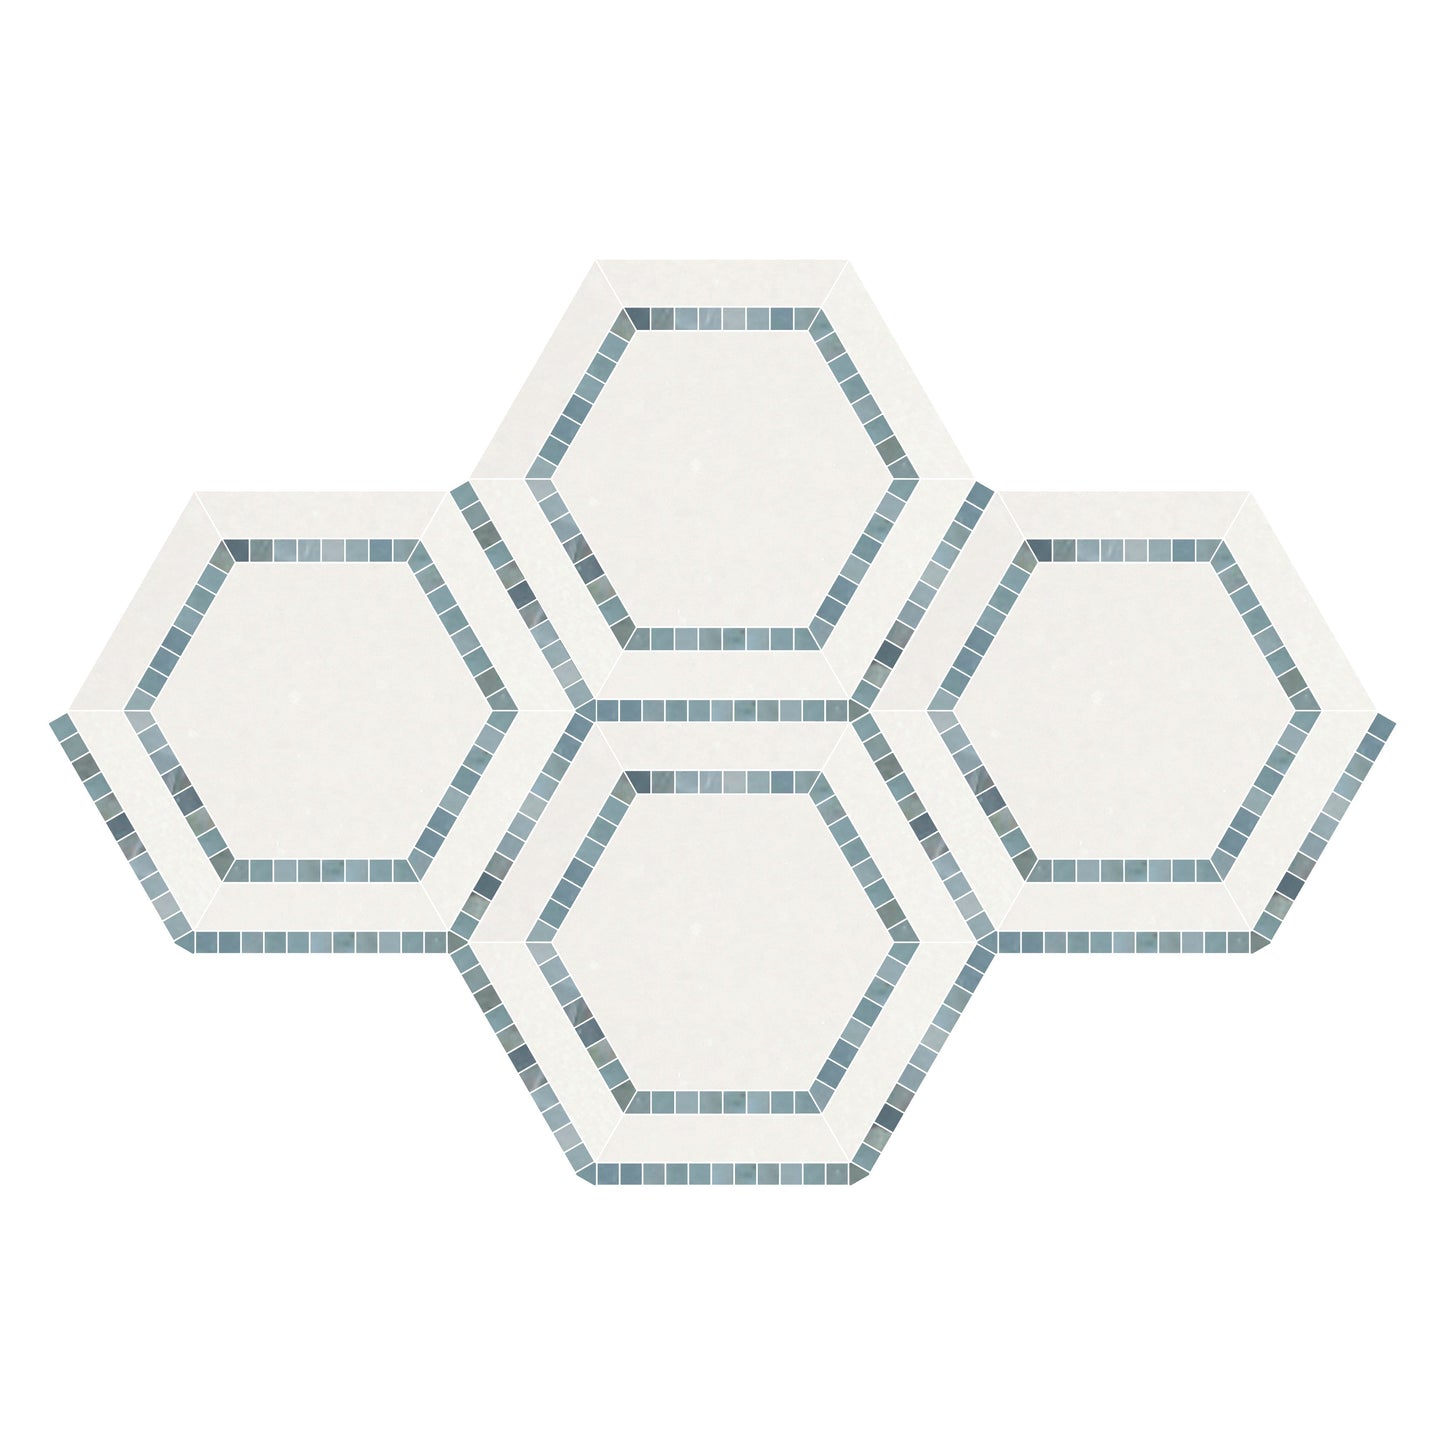 Thassos White Polished Hexagon Combination w/ Blue - Gray Mosaic Tile 5x5"